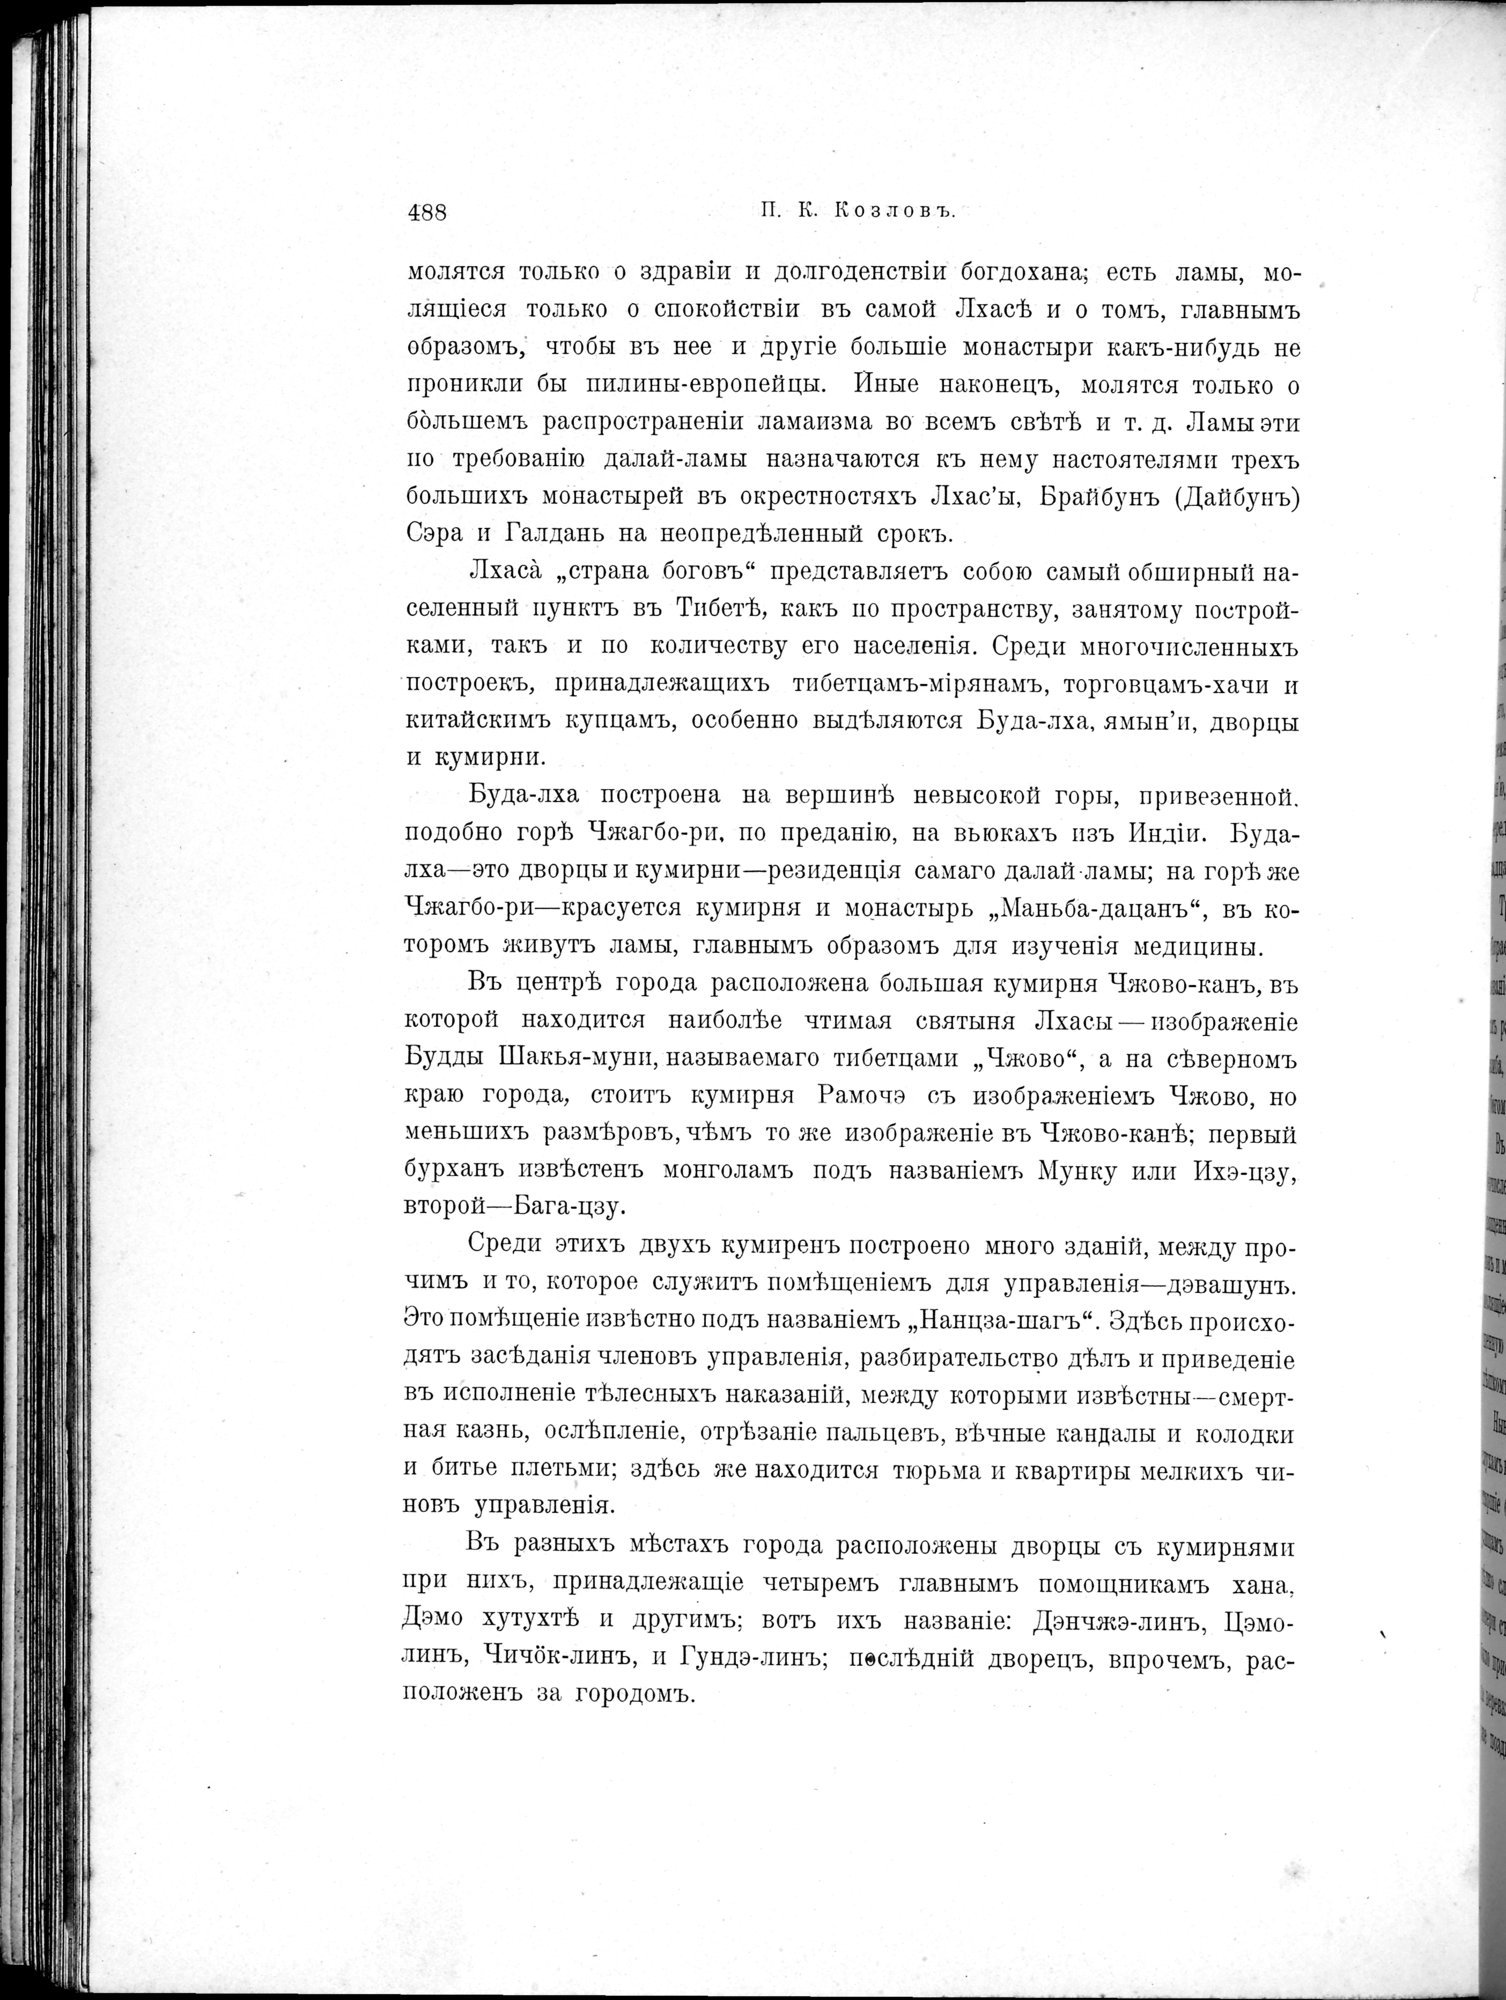 Mongoliia i Kam : vol.2 / Page 304 (Grayscale High Resolution Image)